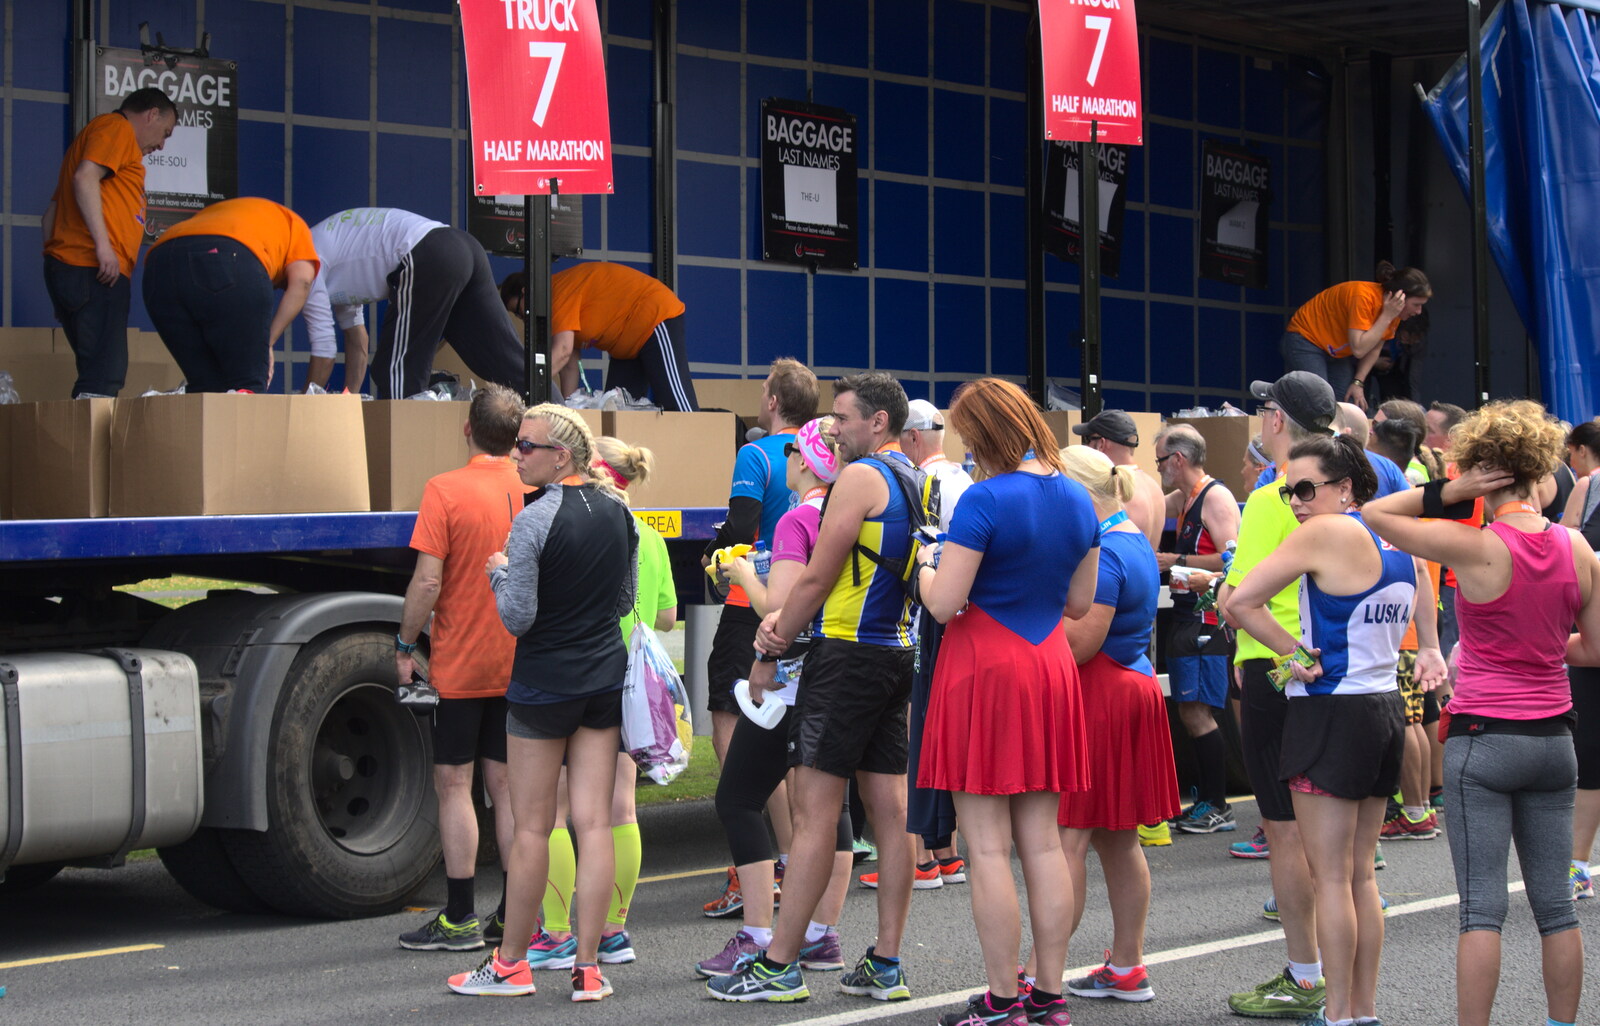 Runners queue up to reclaim their belongings from Isobel's Rock'n'Roll Half Marathon, Dublin, Ireland - 13th August 2017